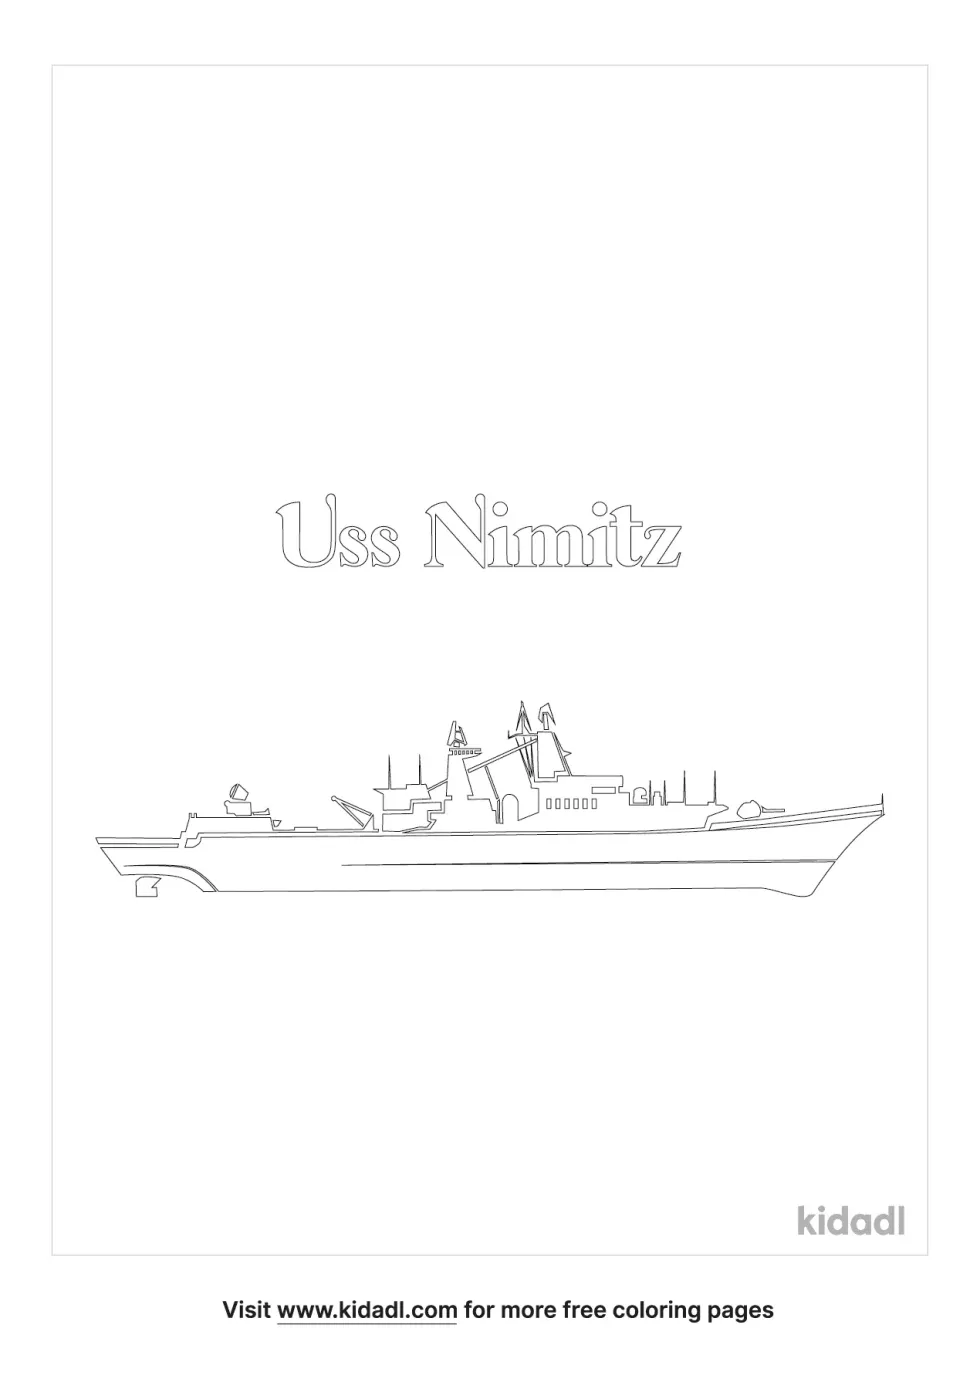 Uss Nimitz Coloring Page